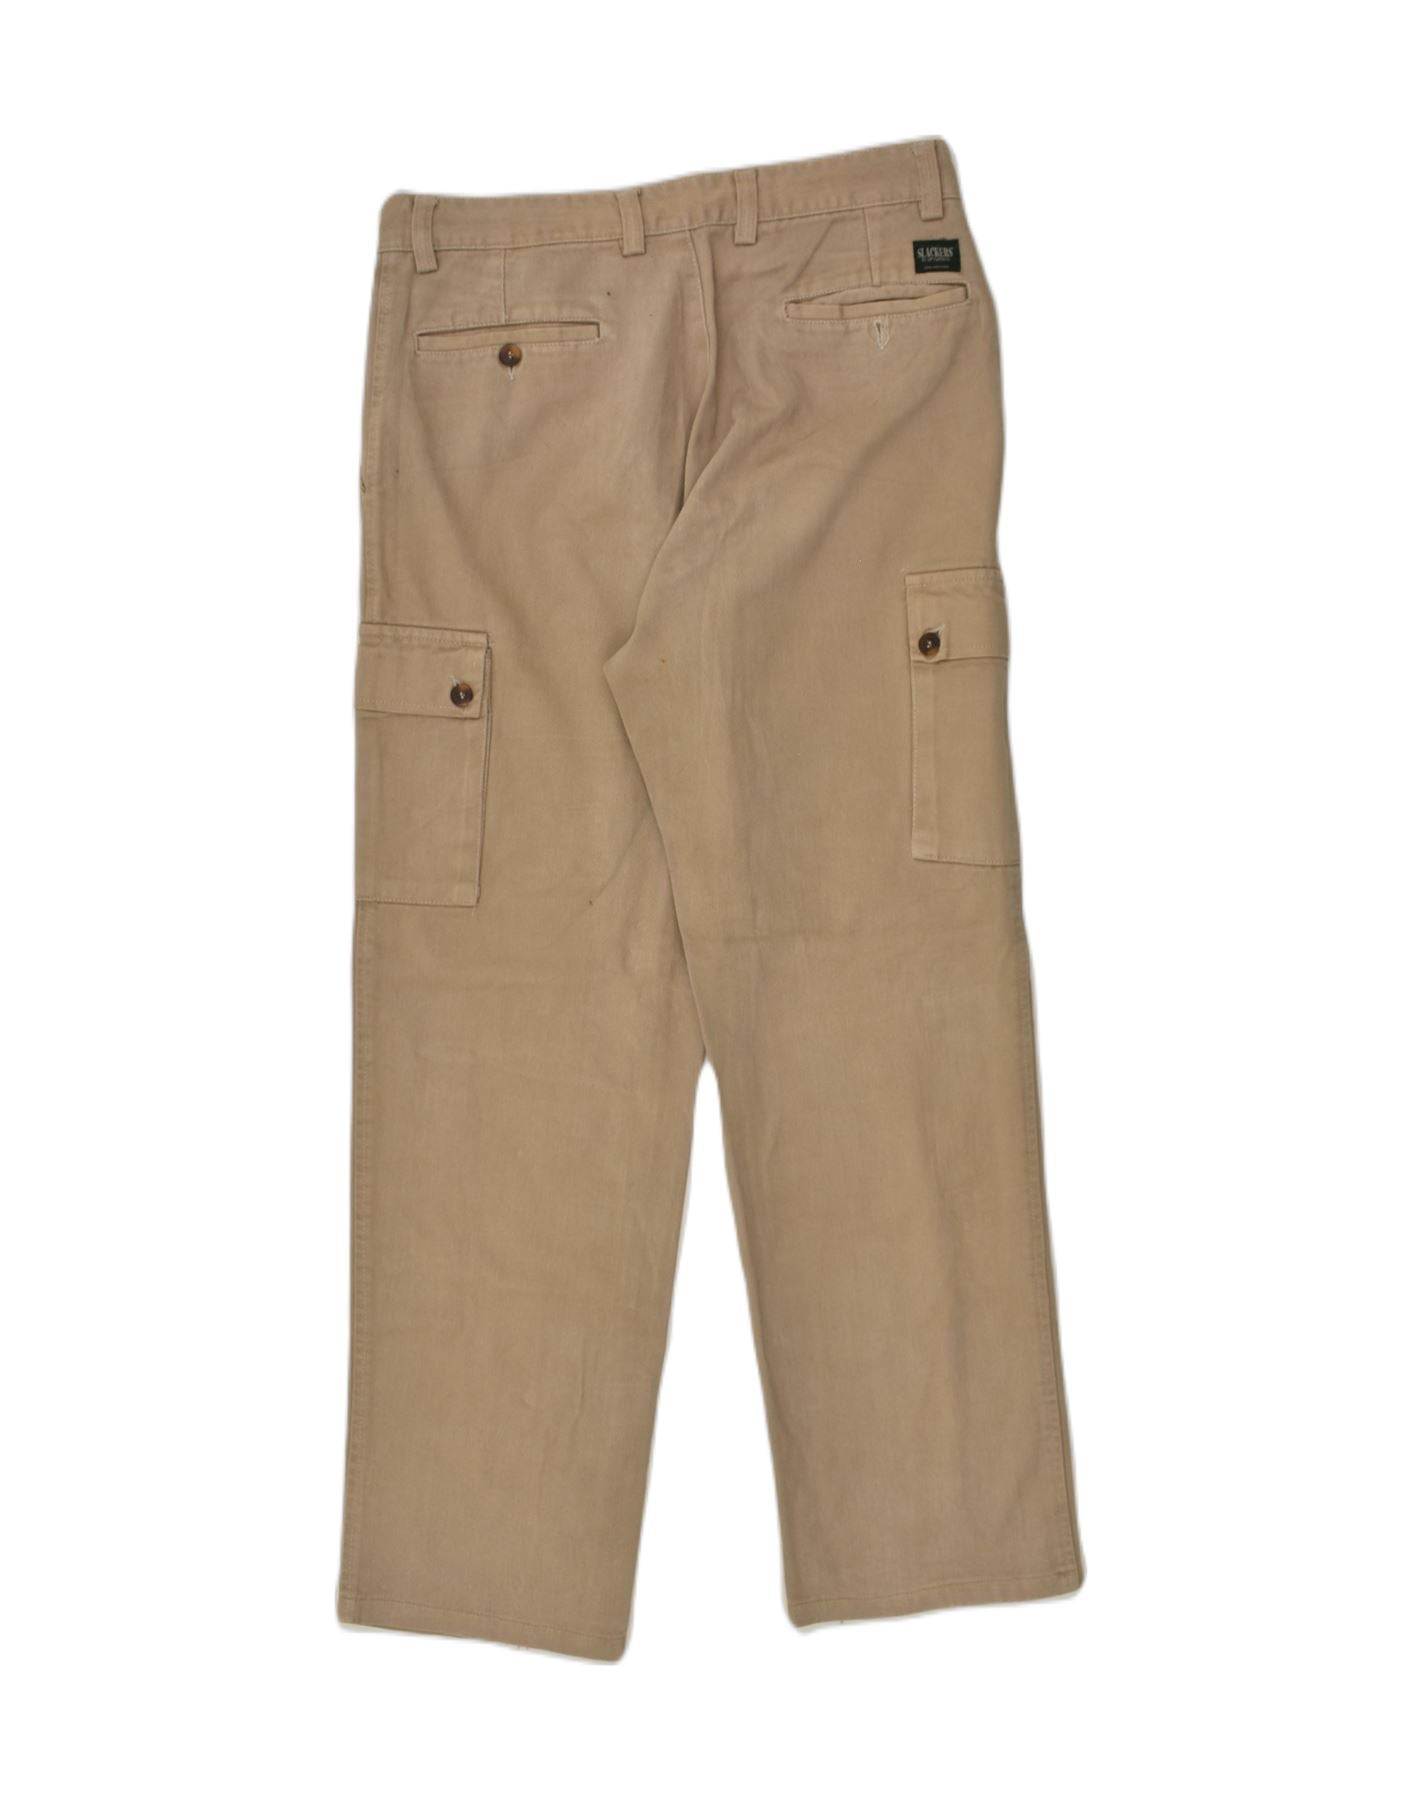 Men's Red Kap Wrinkle-Resistant Cotton Cargo Pant